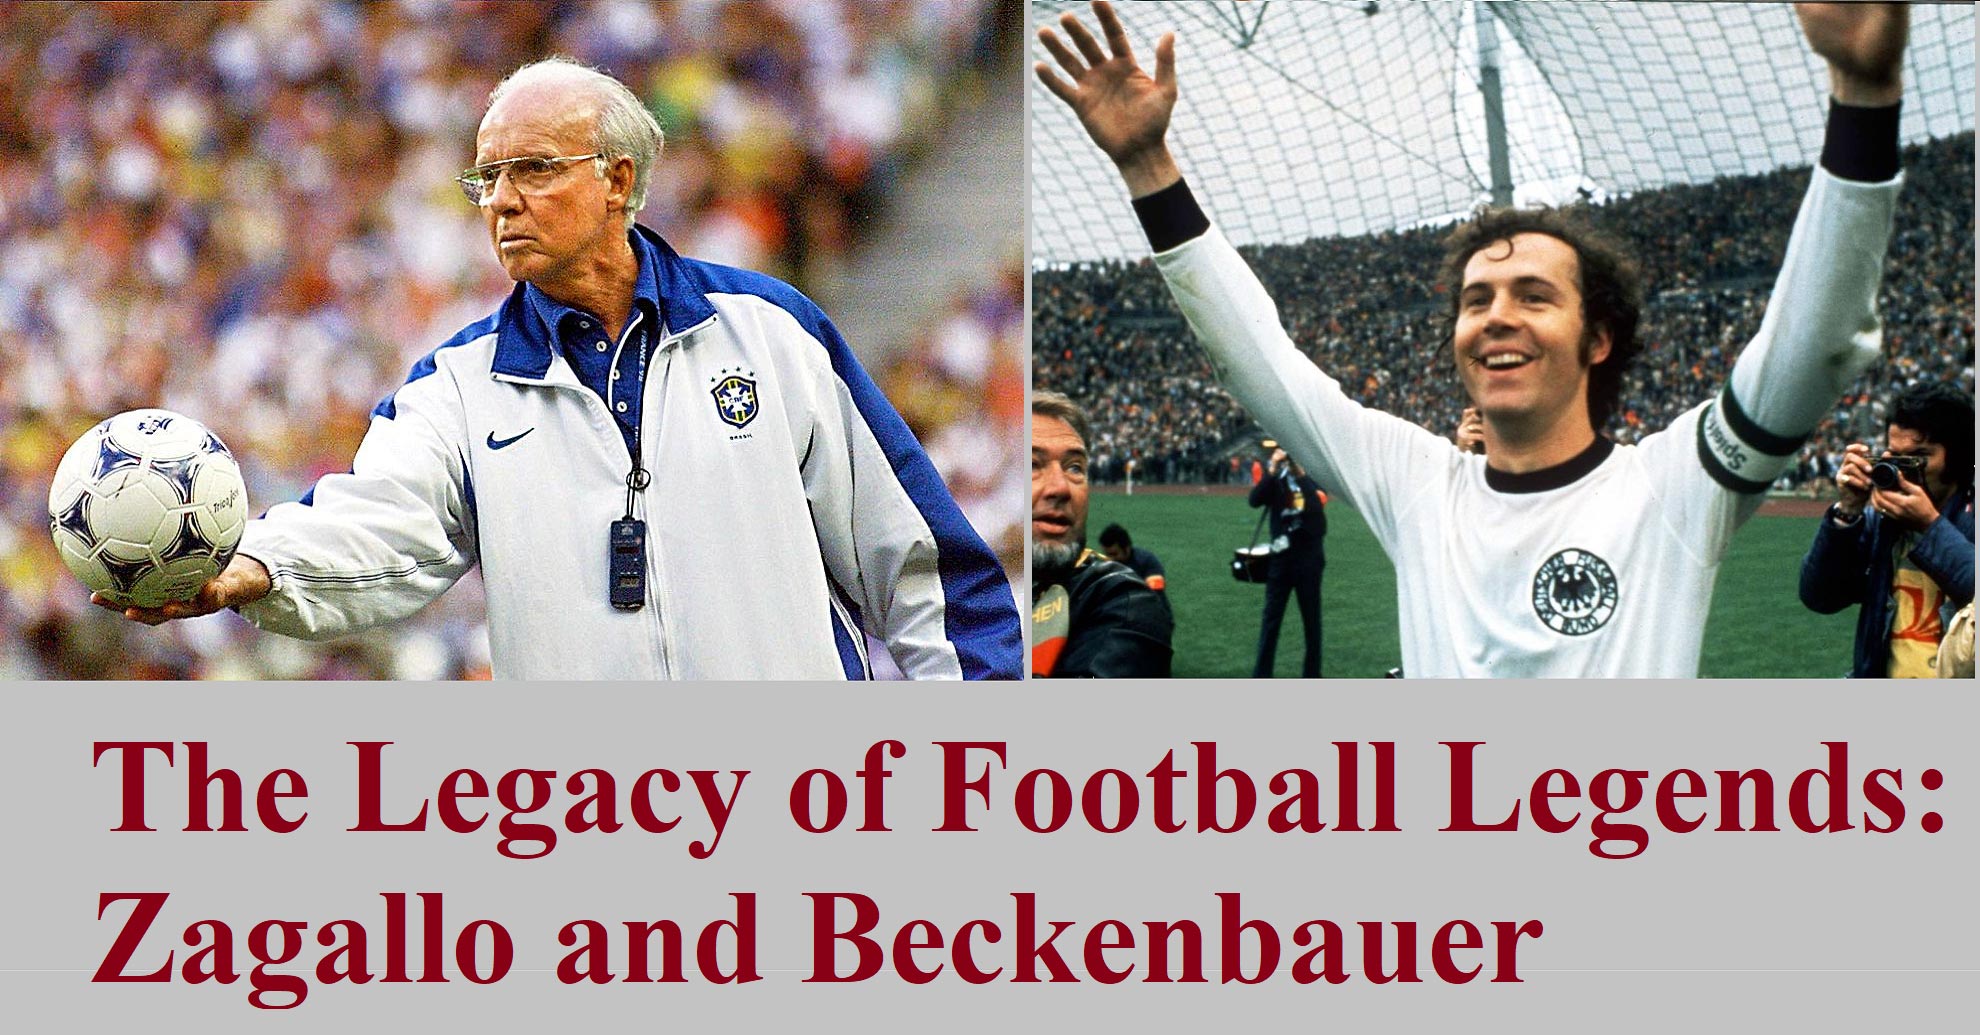 Zagallo and Beckenbauer